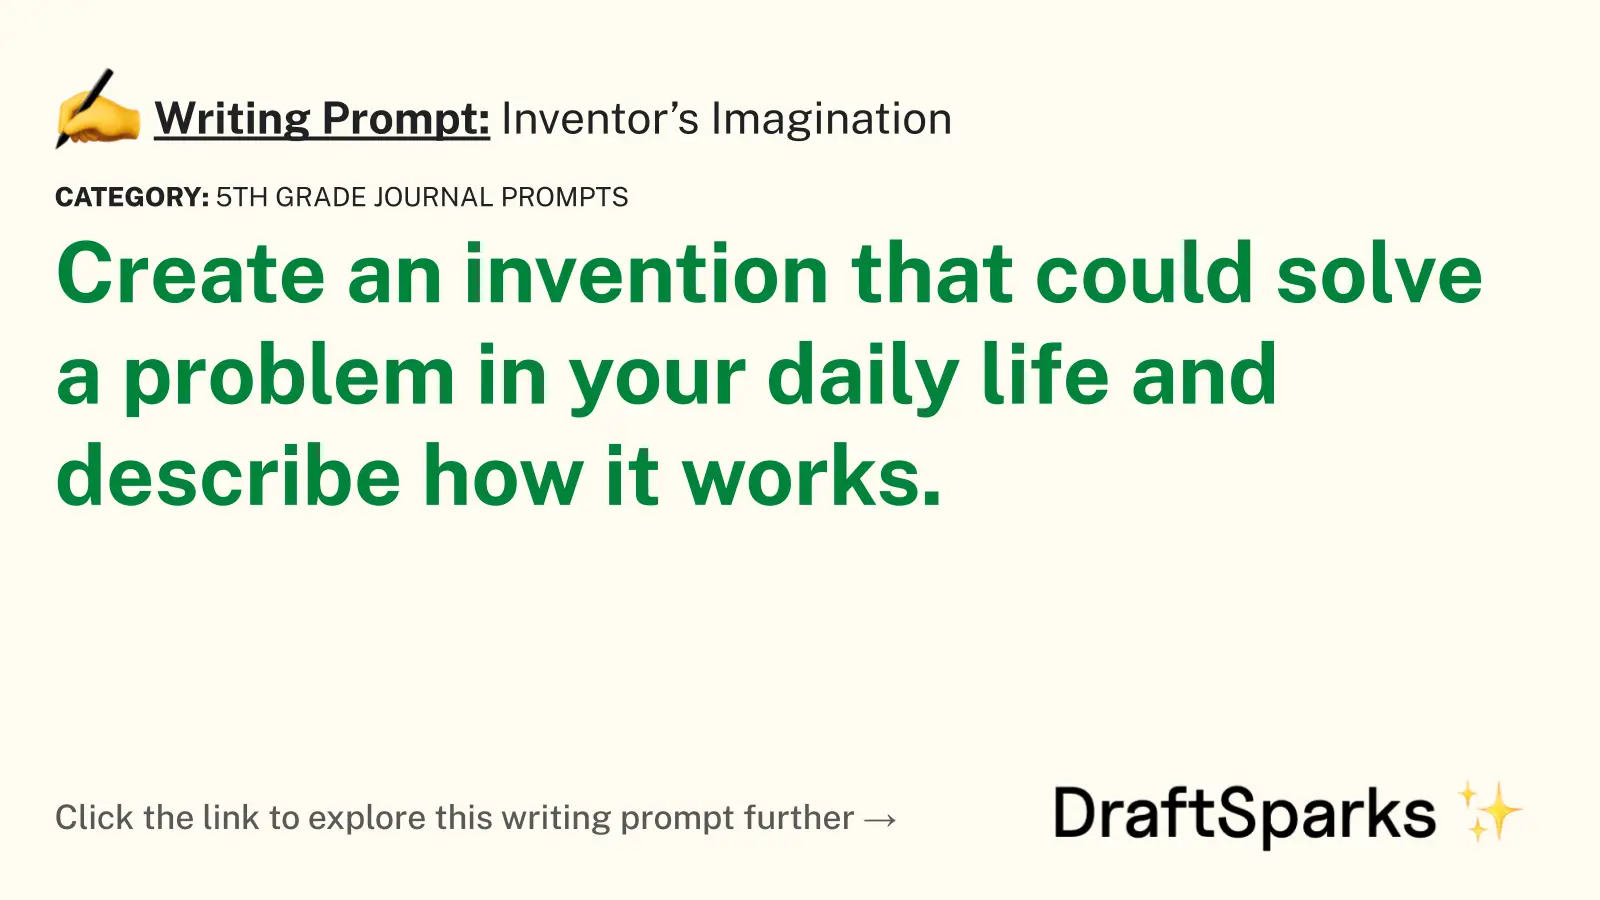 Inventor’s Imagination